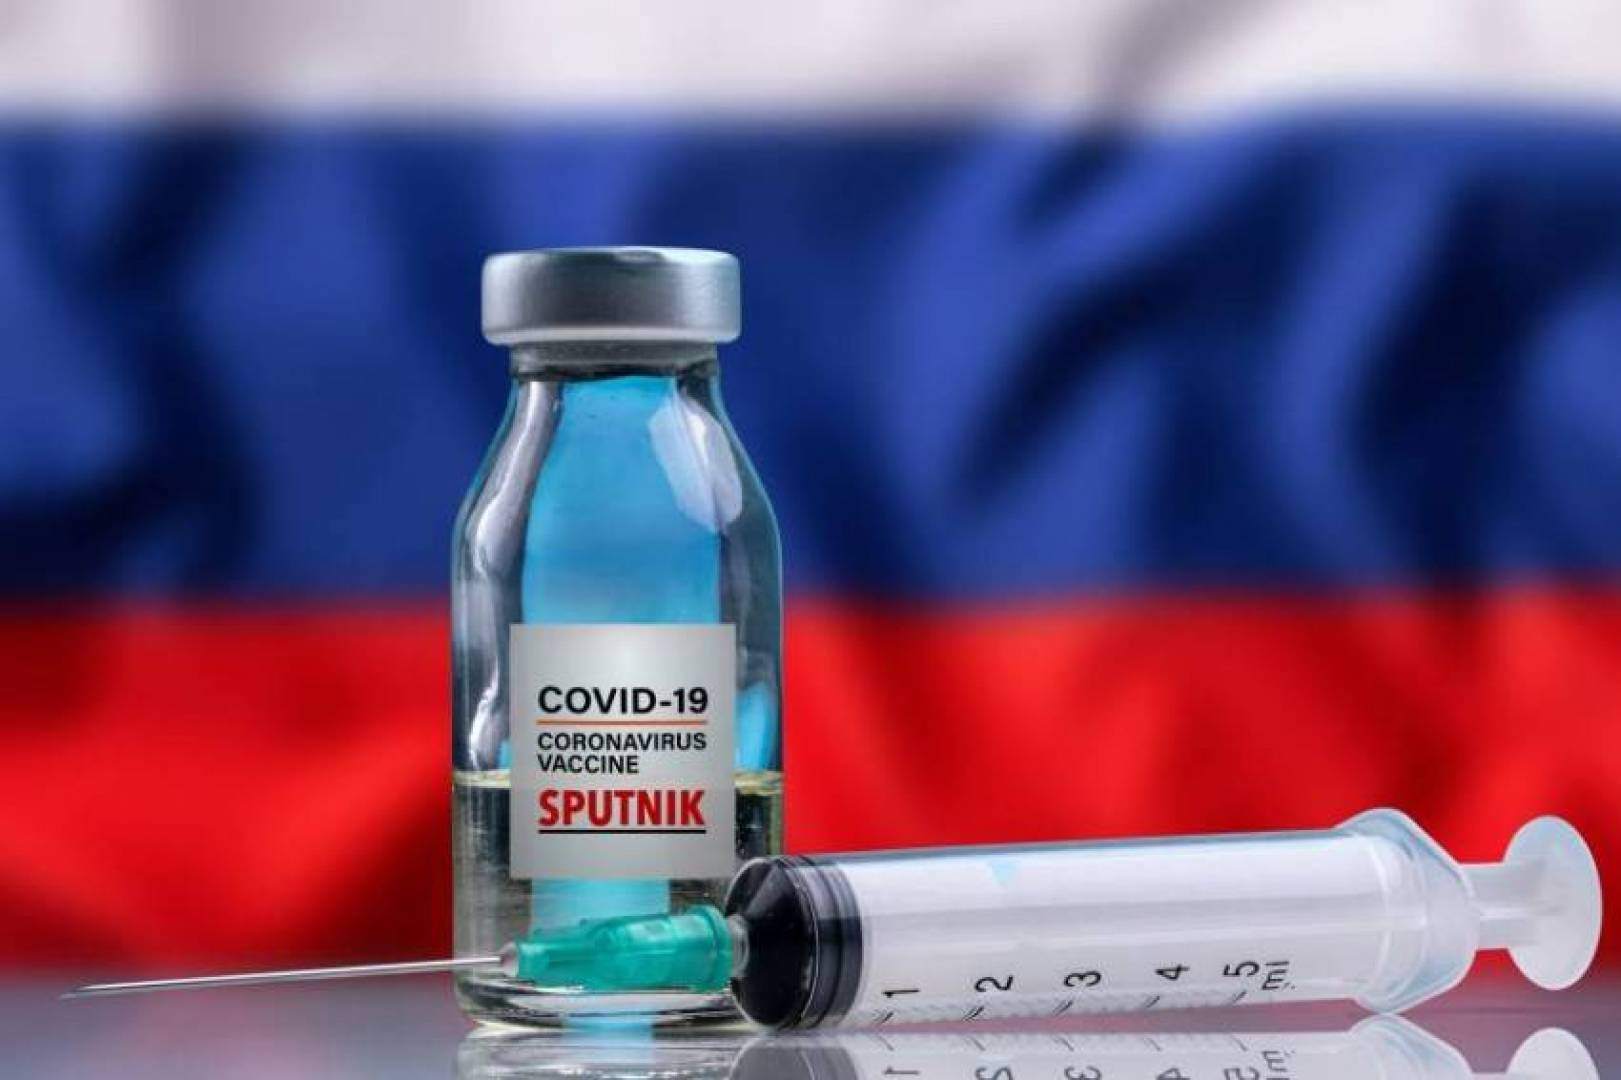 Вакцина спутник. Спутник v вакцина. Российская вакцина Спутник. Covid-19 Спутник.